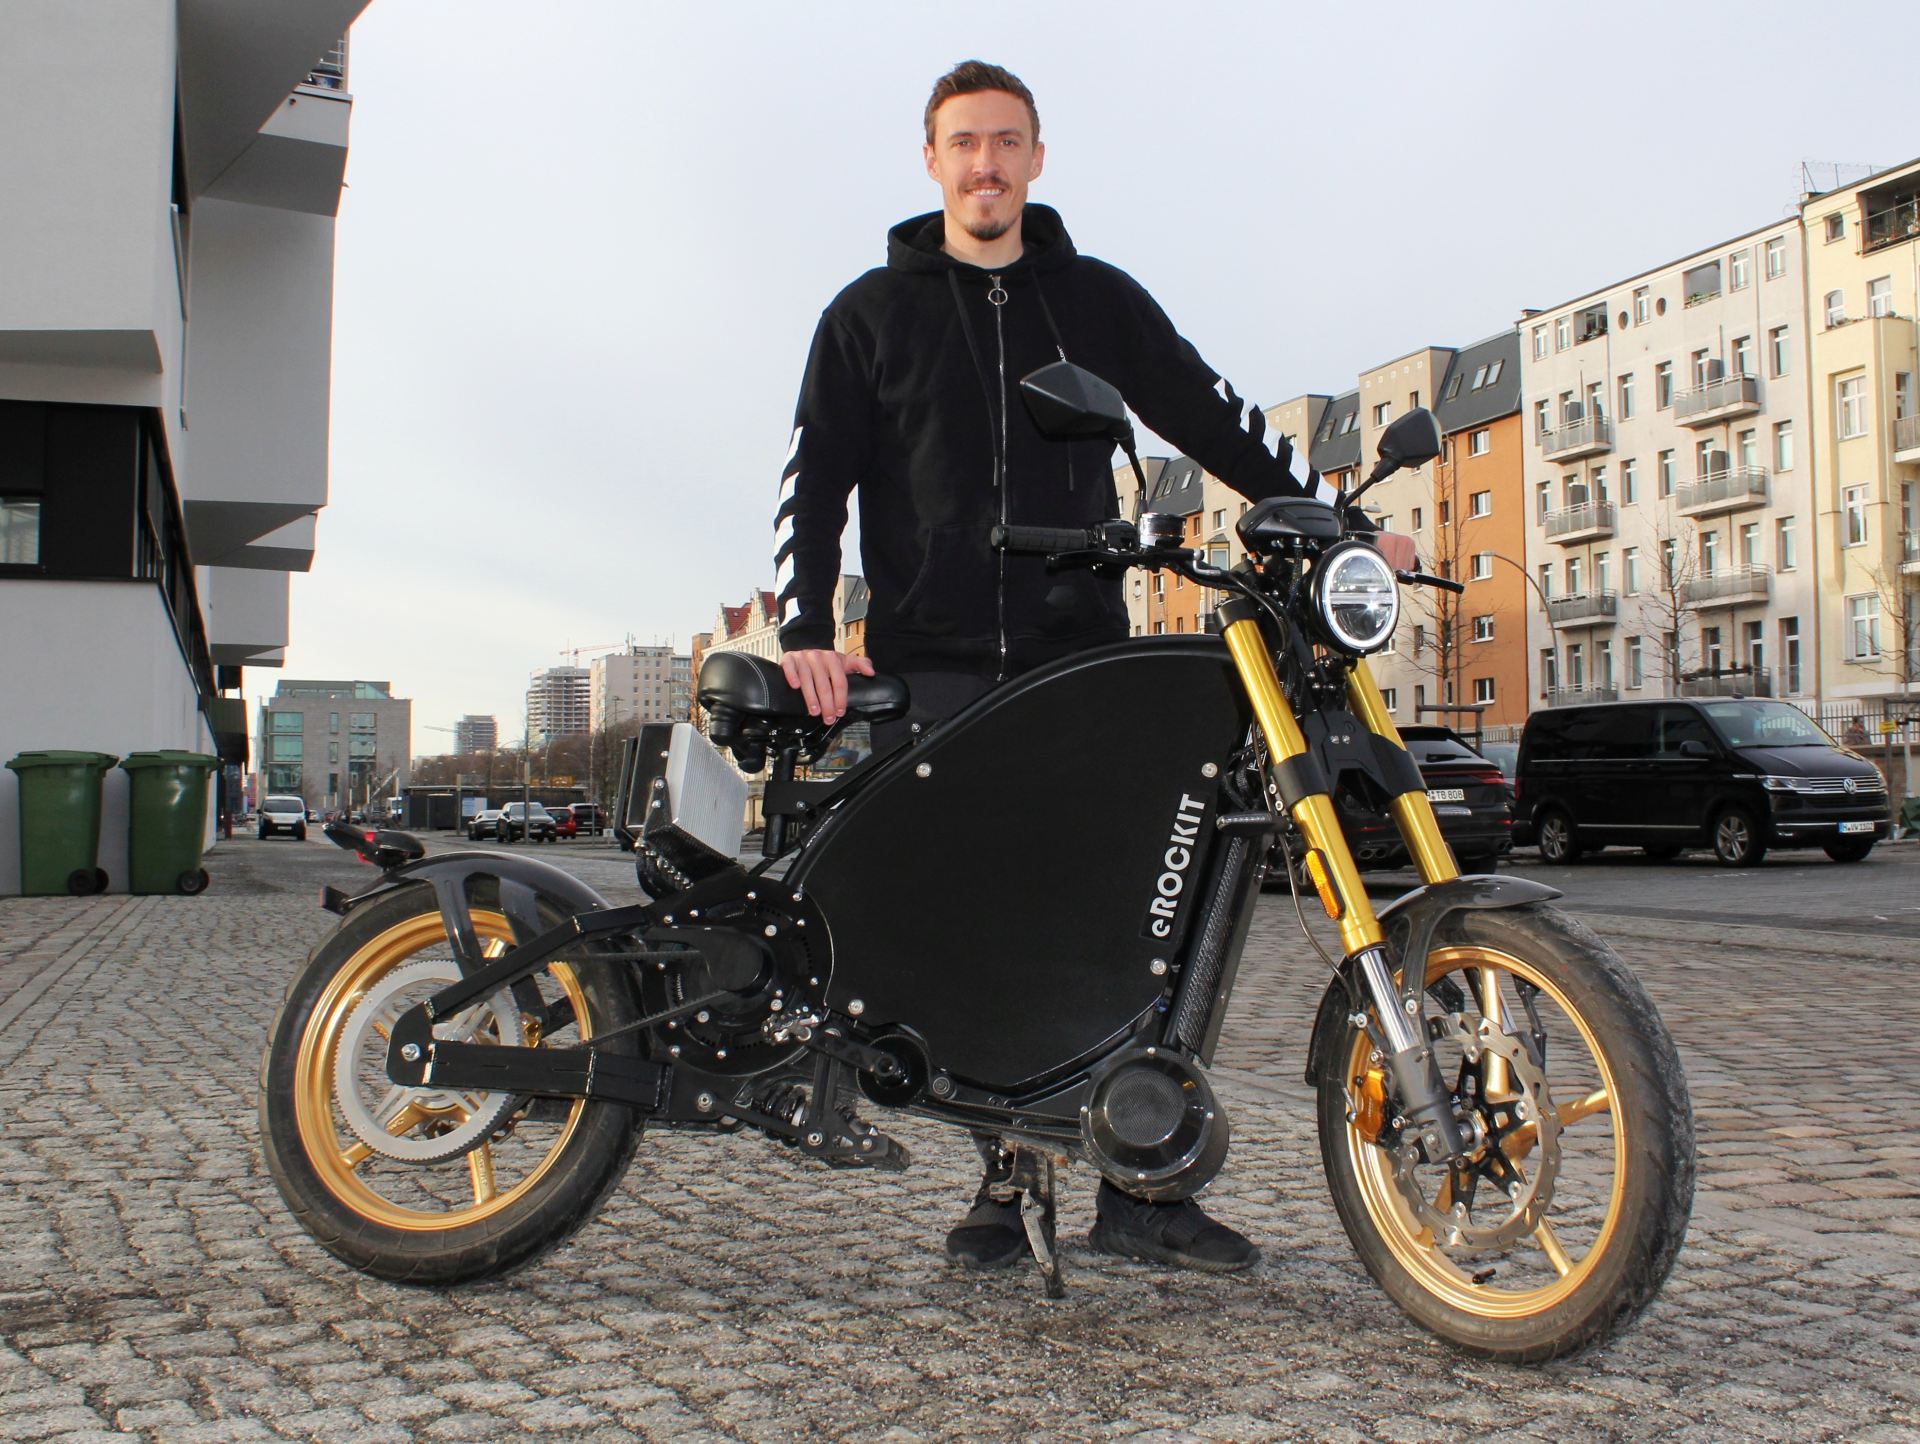 eROCKIT: Fußballprofi Max Kruse investiert in Elektromobilität „Made in Germany“